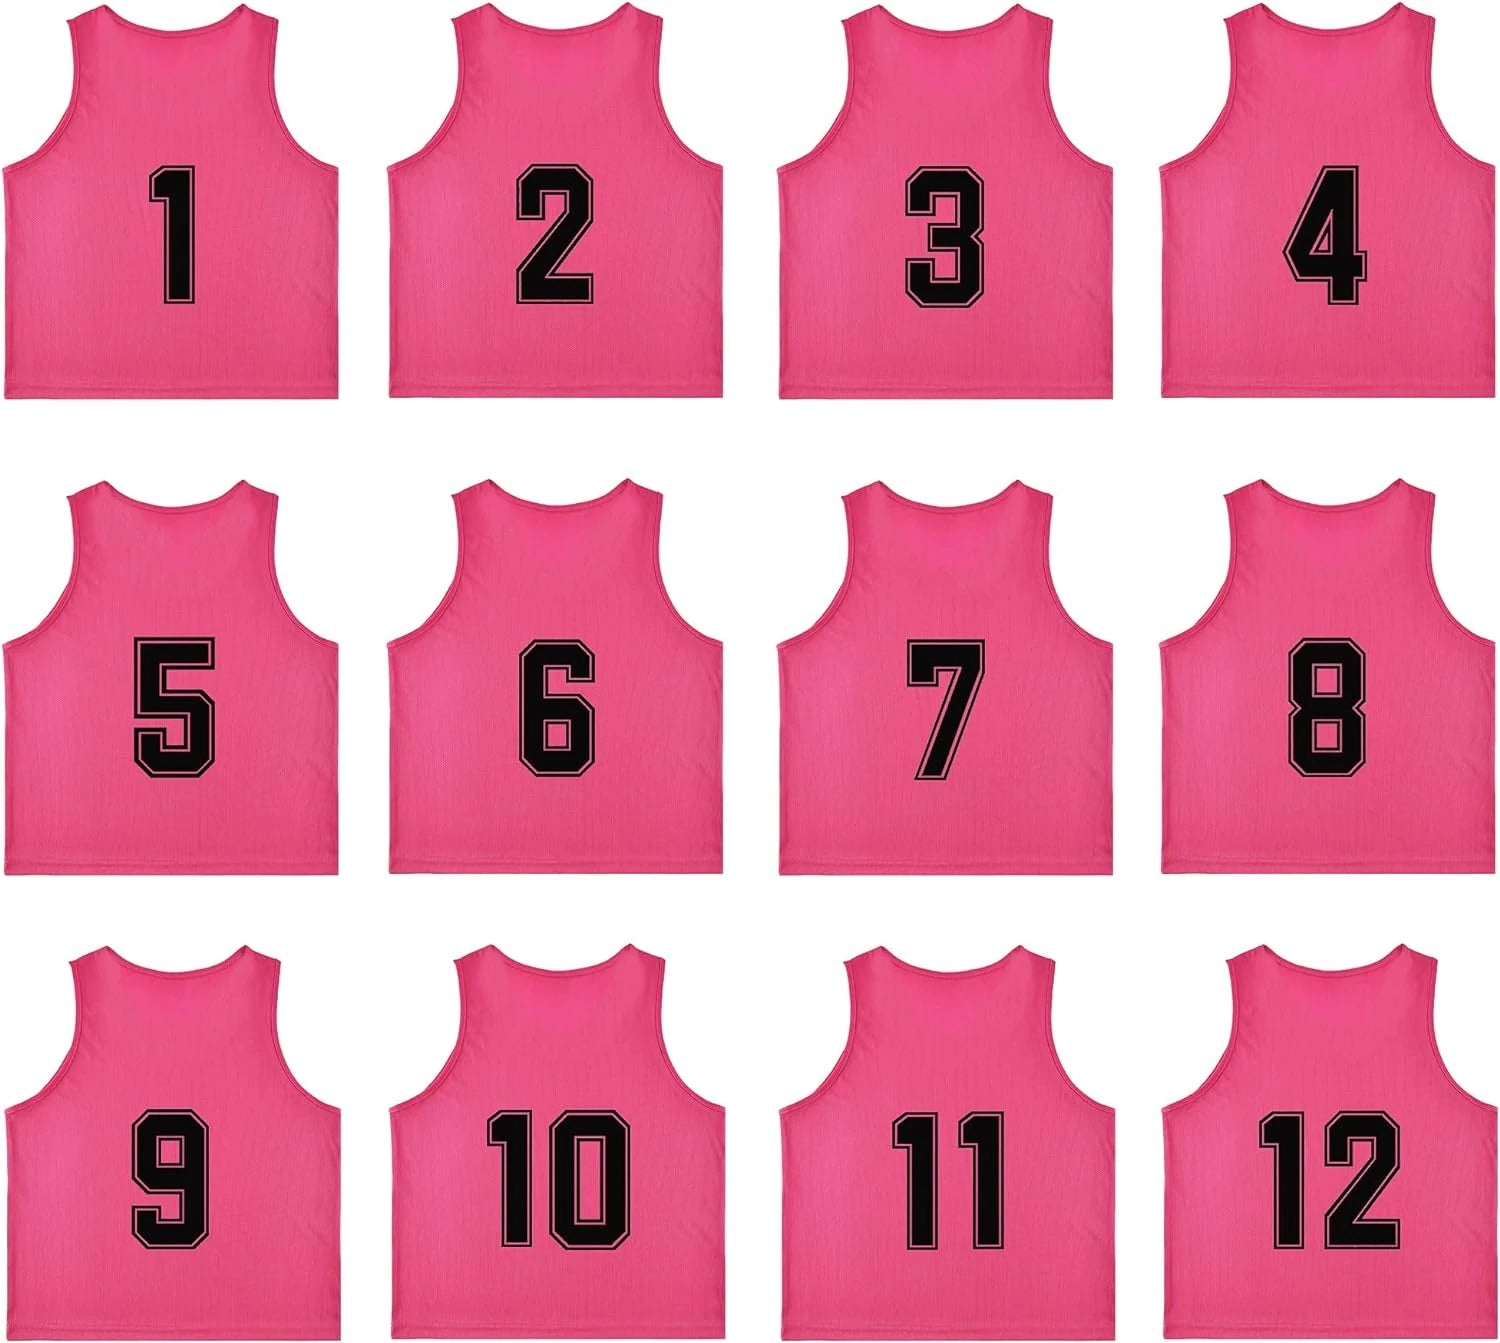 Buy pink Team Practice Scrimmage Vests Sport Pinnies Training Bibs Numbered (1-12)